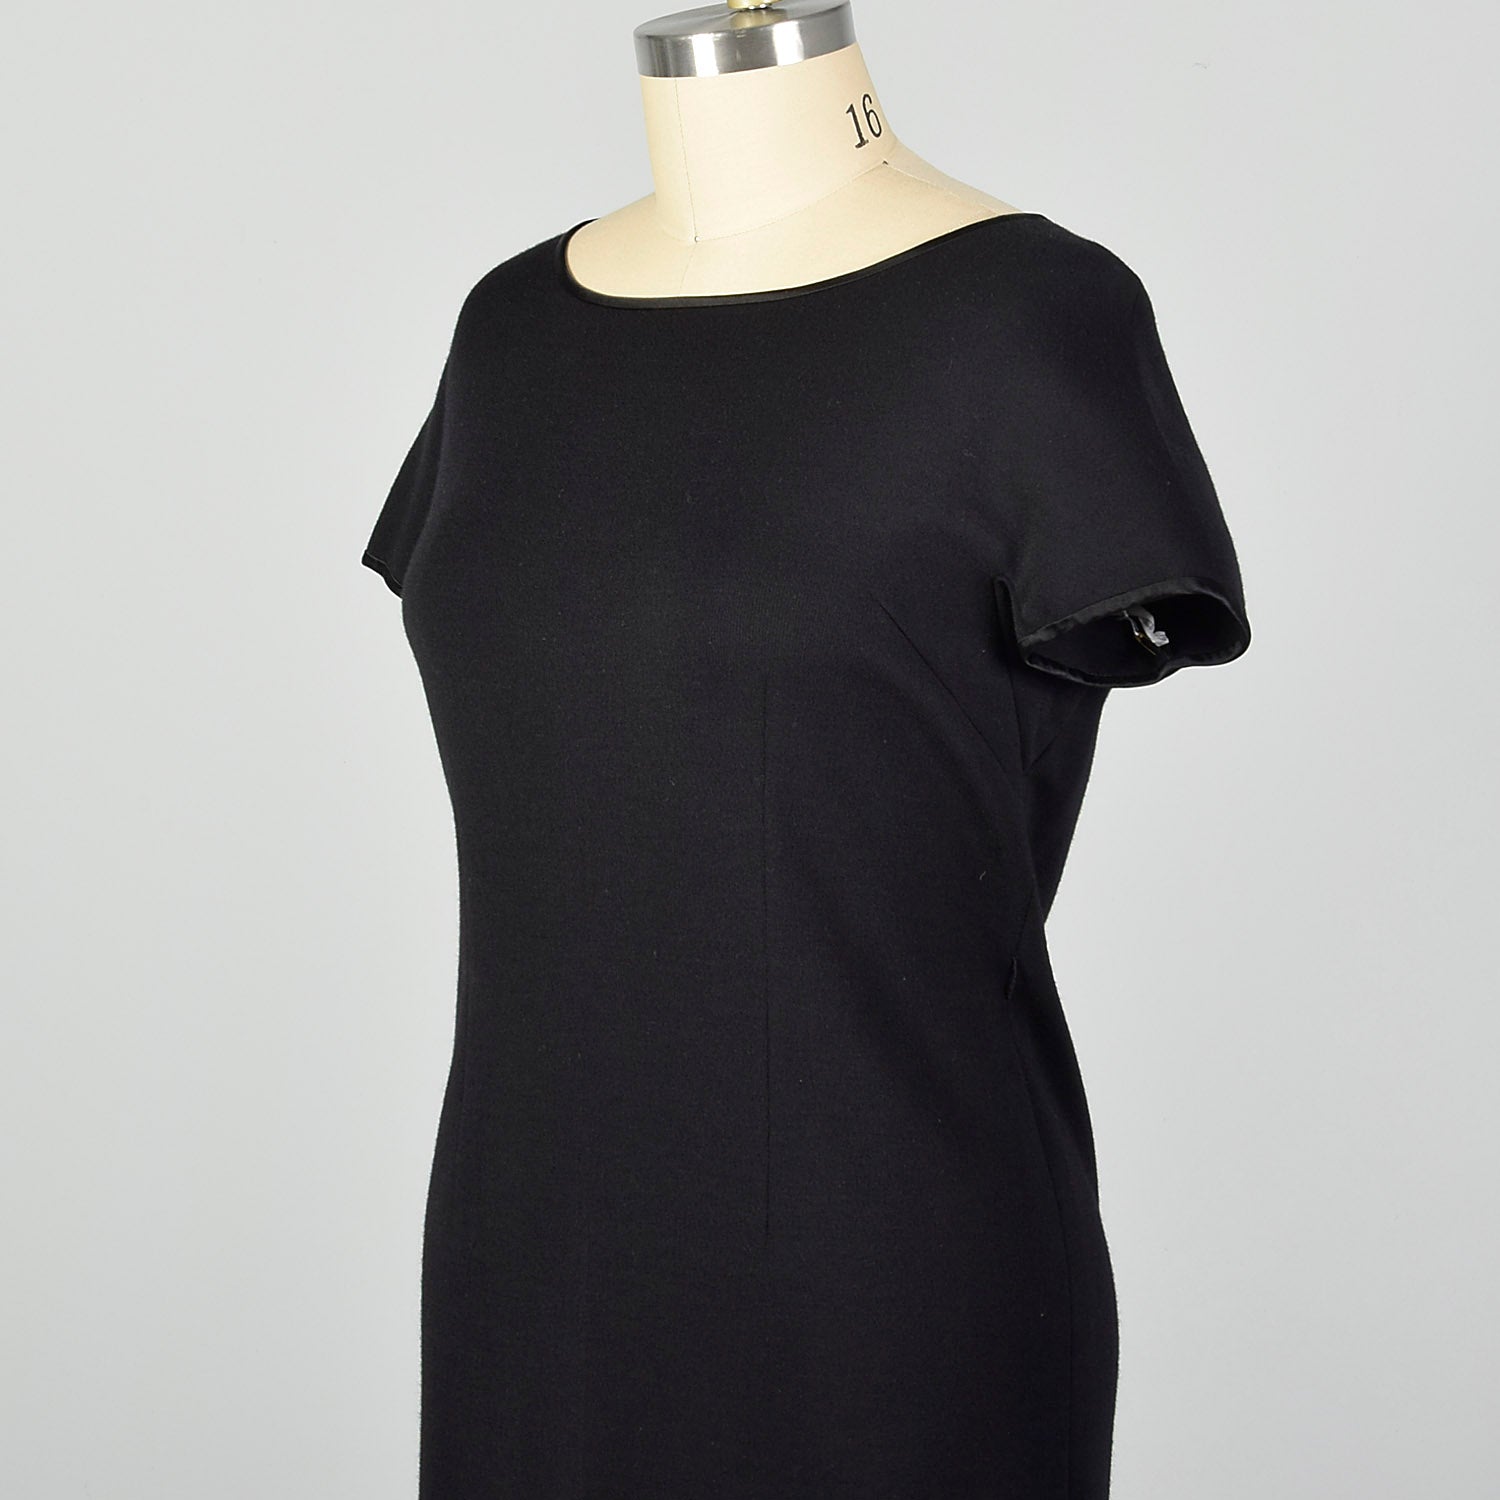 XL 1960s Black Shift Dress